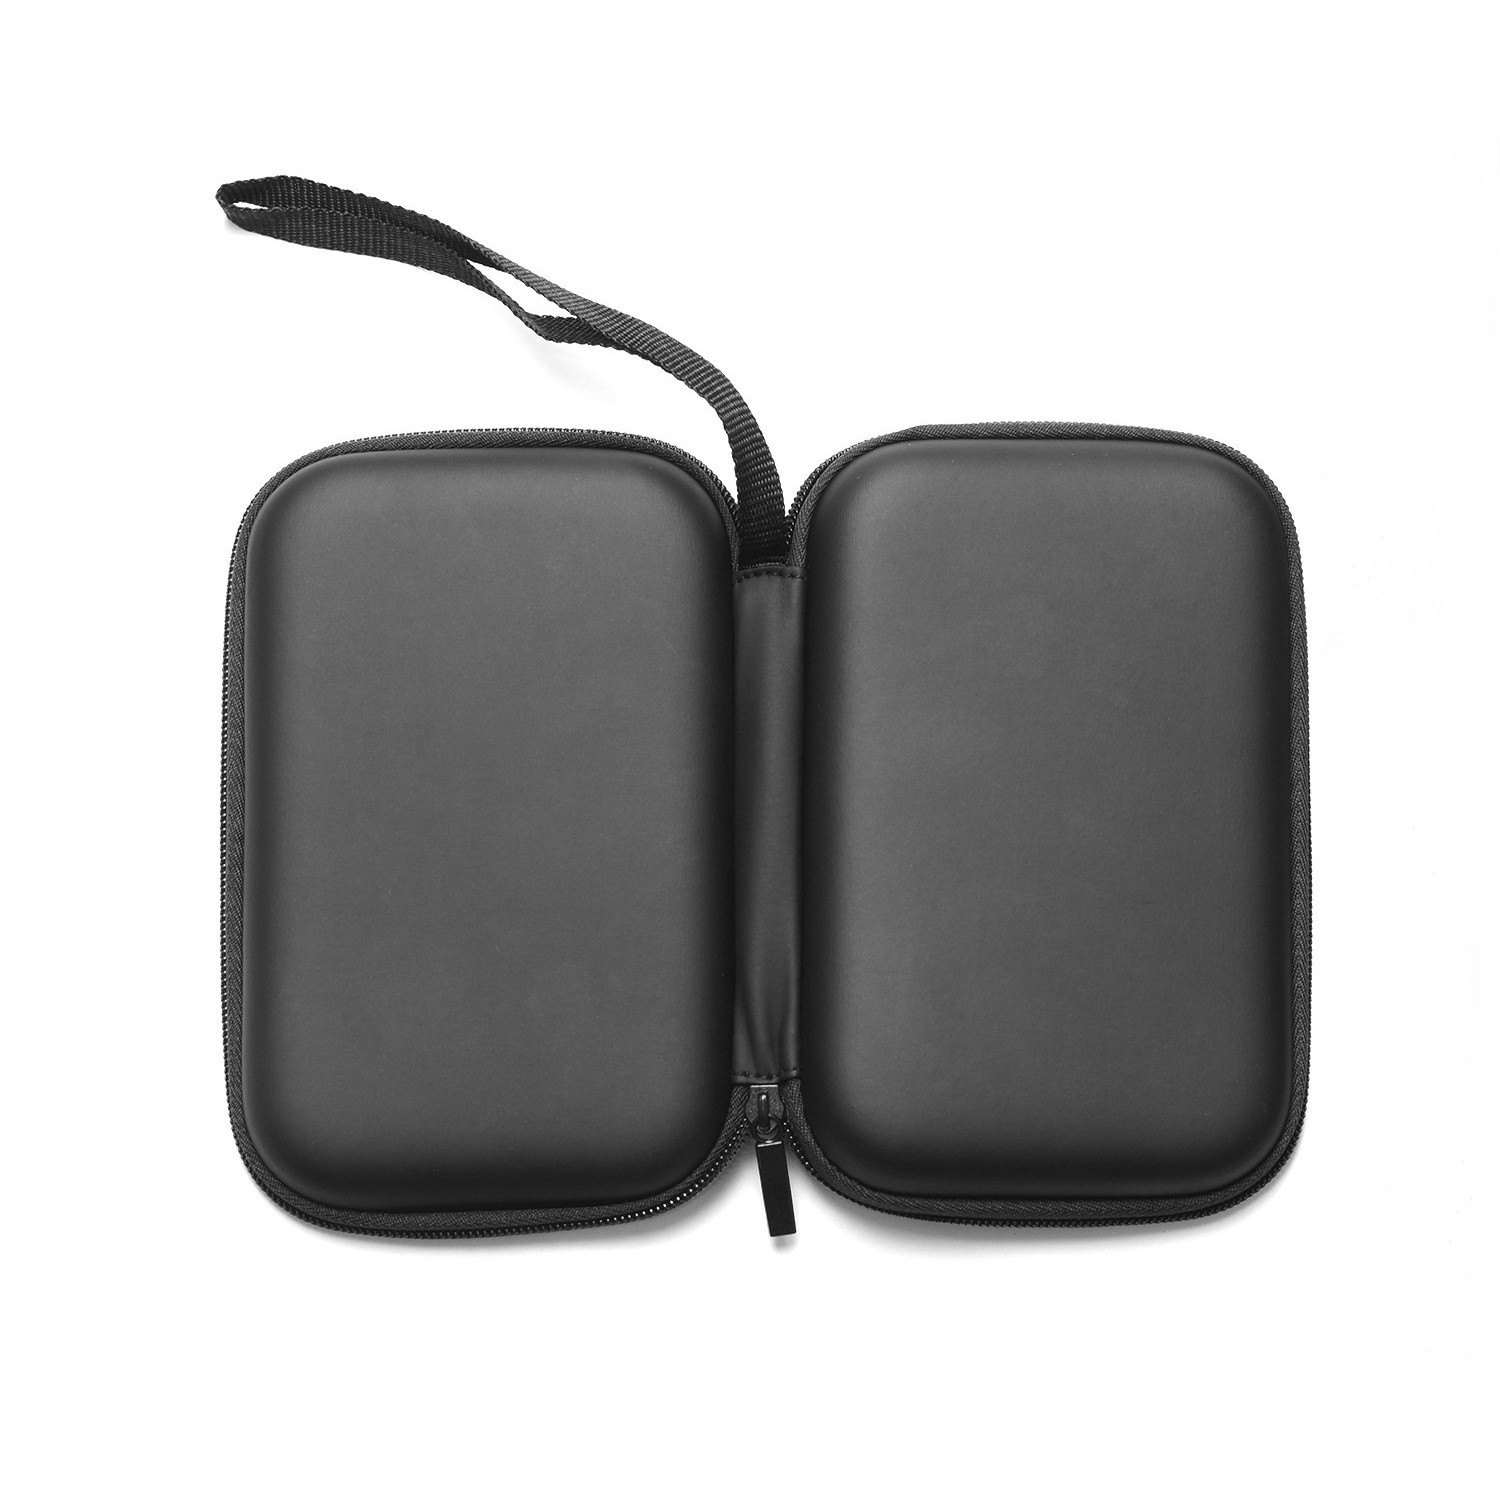 Portable-Protection-Bag-Storage-Case-for-FiiO-Q5-M7-HIFI-DSD-Amplifier-1759409-2